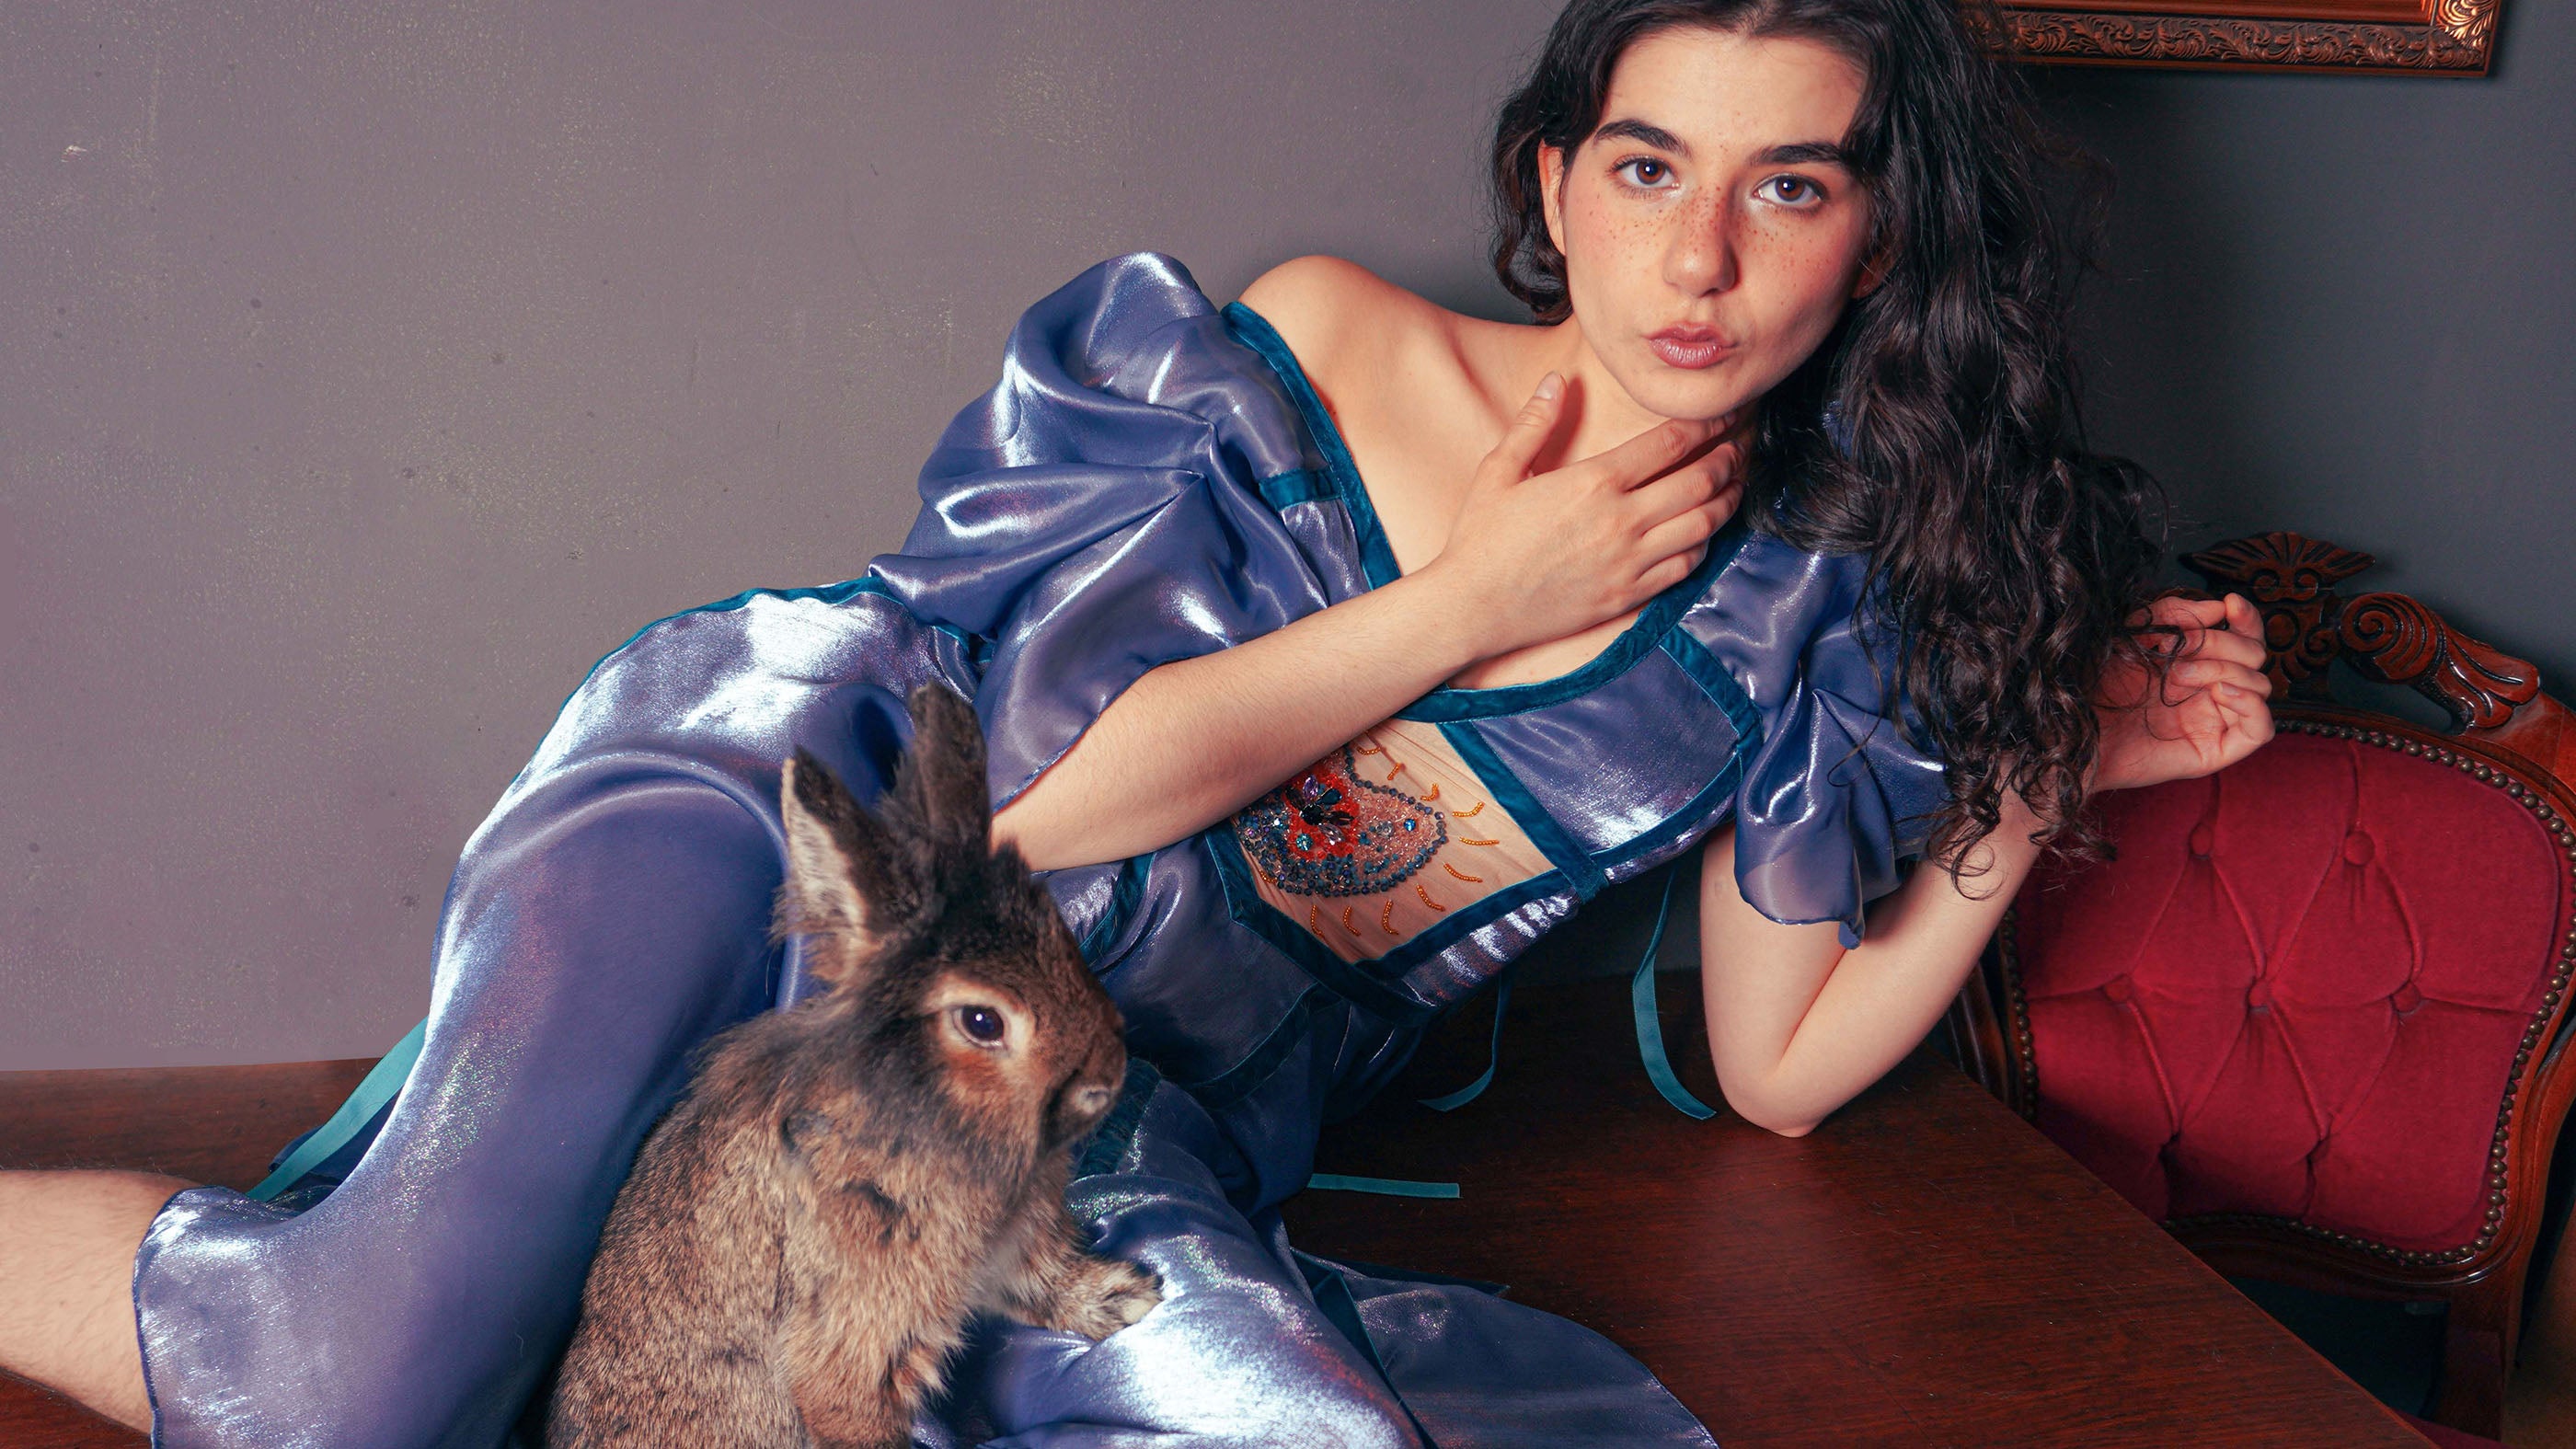 Natalia Petruch, year of the Rabbit, luxury fashion, blue dress, embroidered dress, high fashion